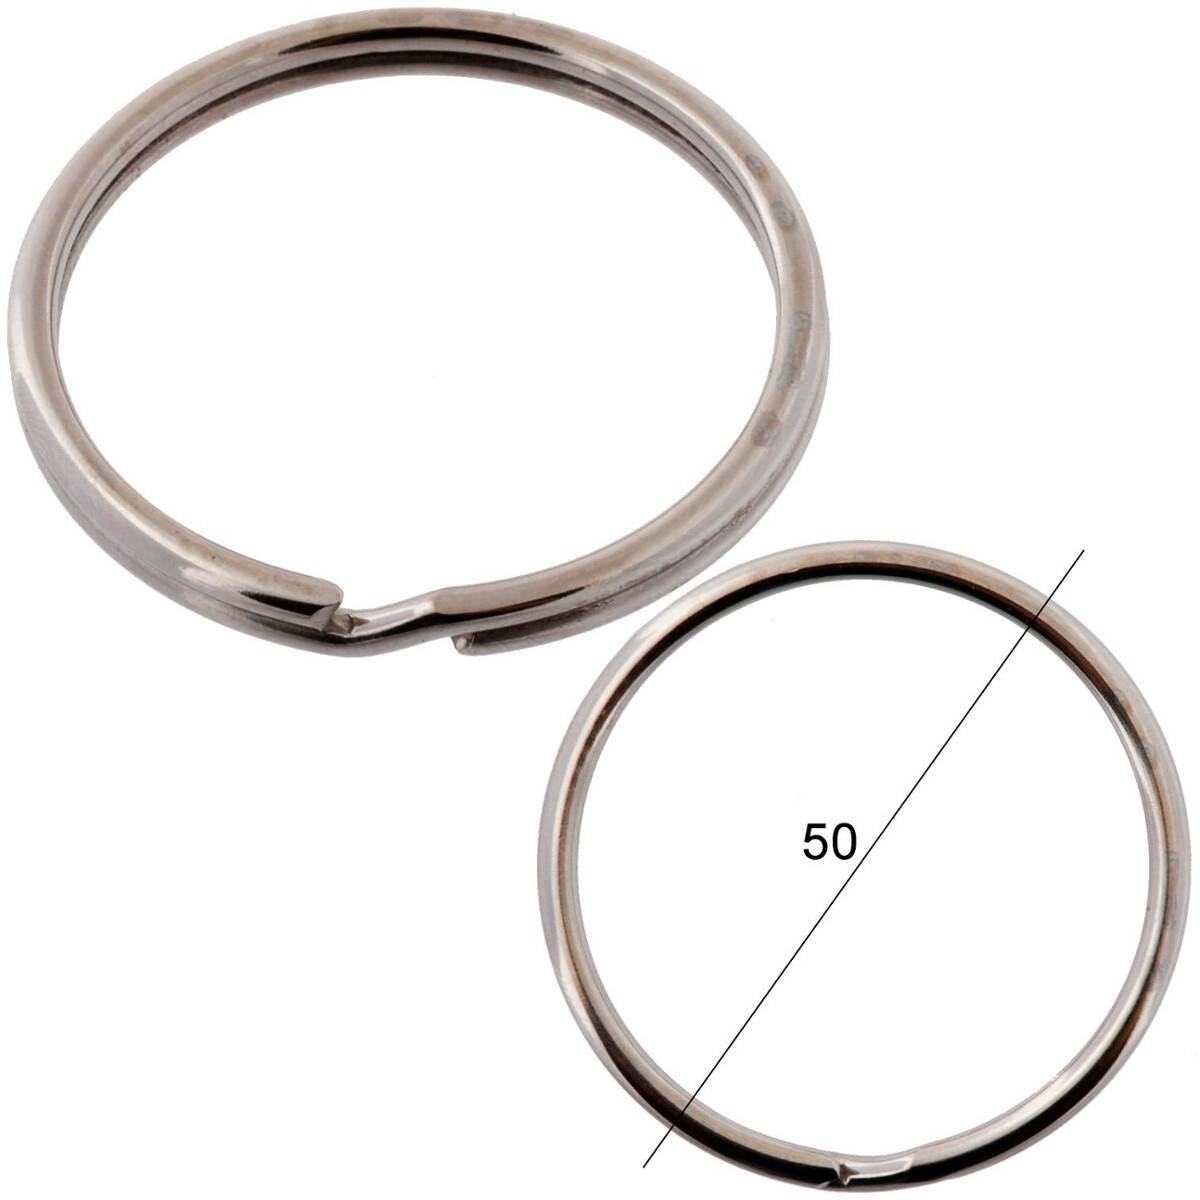 Key rings standard - diameter 50mm